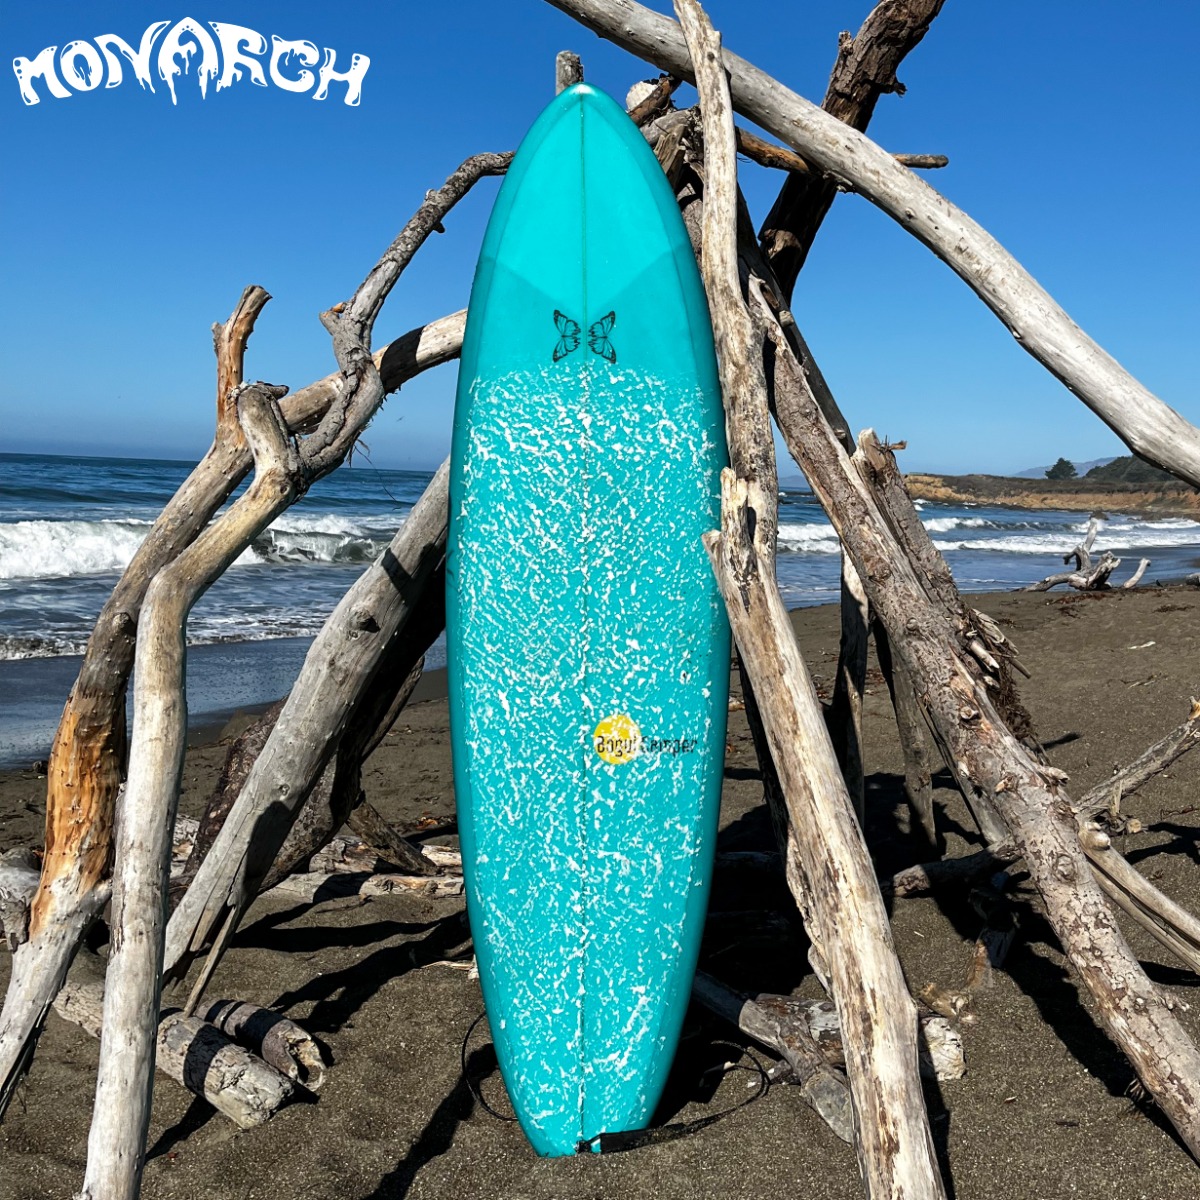 Light Blue Surfboard on firewood on beach